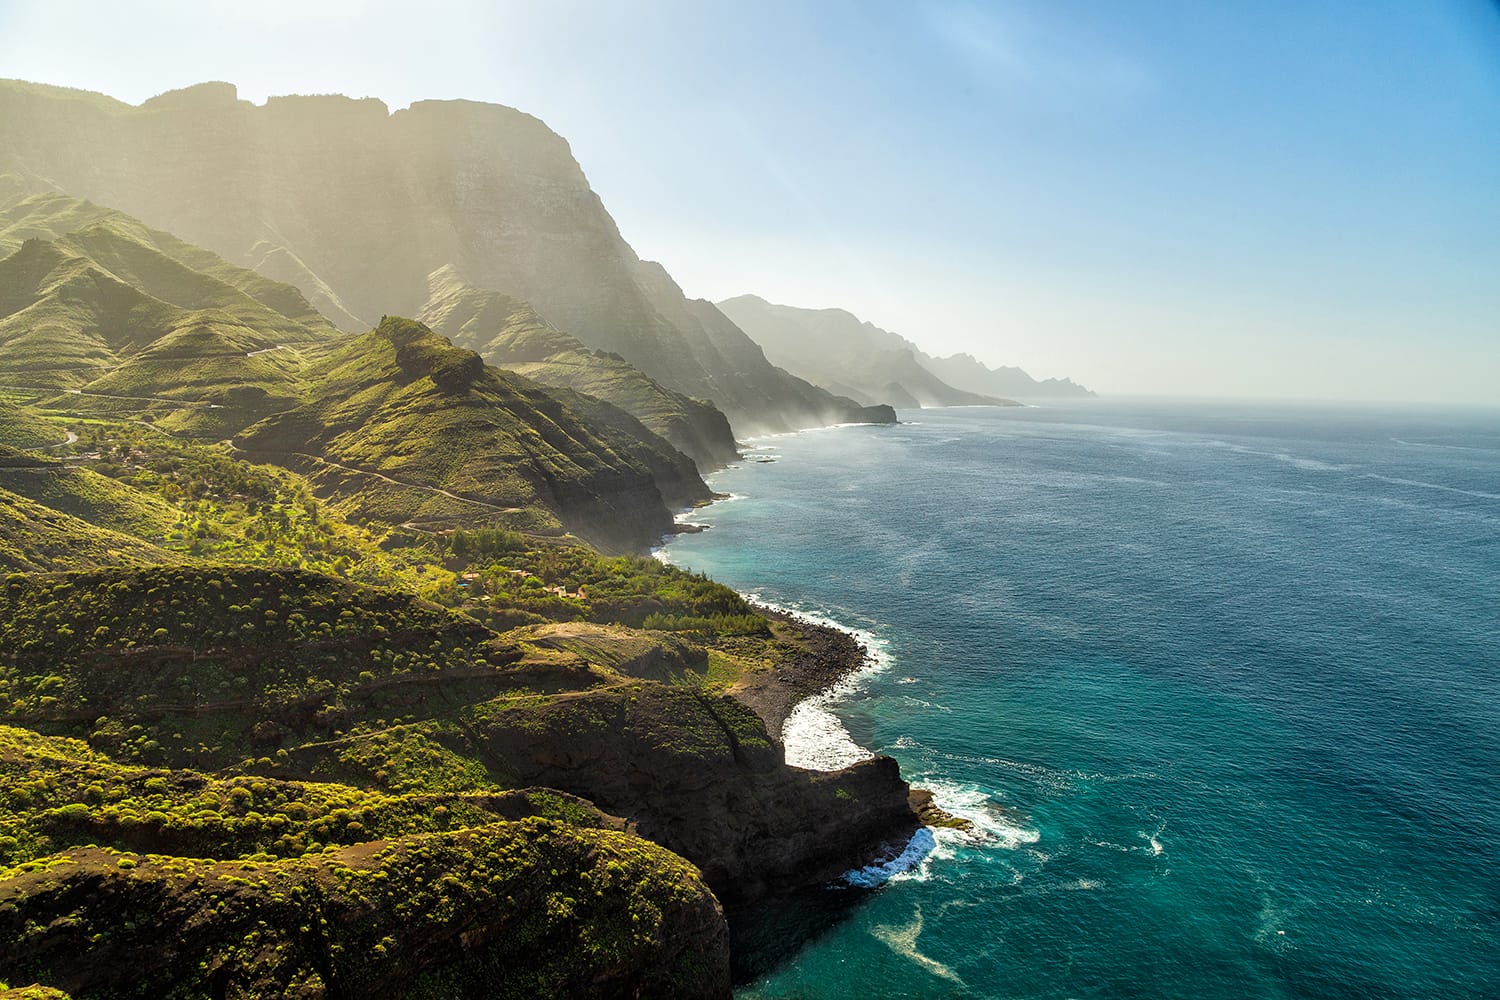 Green hills and cliffs of Tamadaba Natural Park on the coast of the ocean near Agaete, Las Palmas, Gran Canaria island, Spain